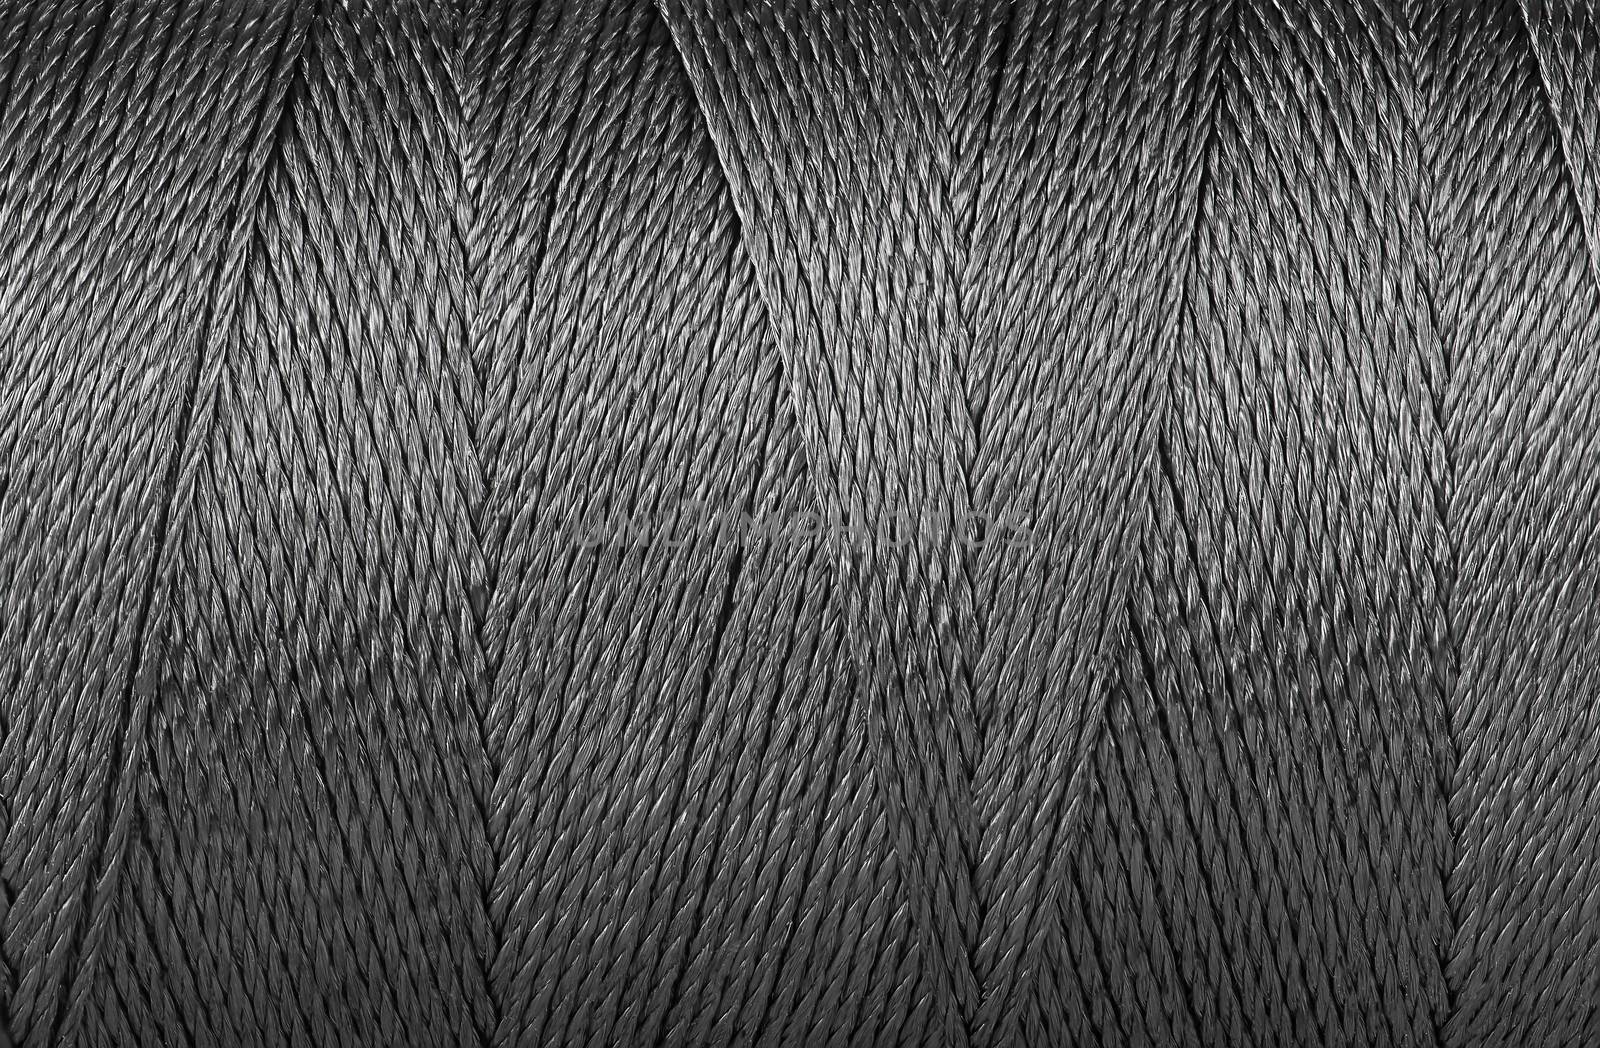 Background close up blue thread texture by Cipariss